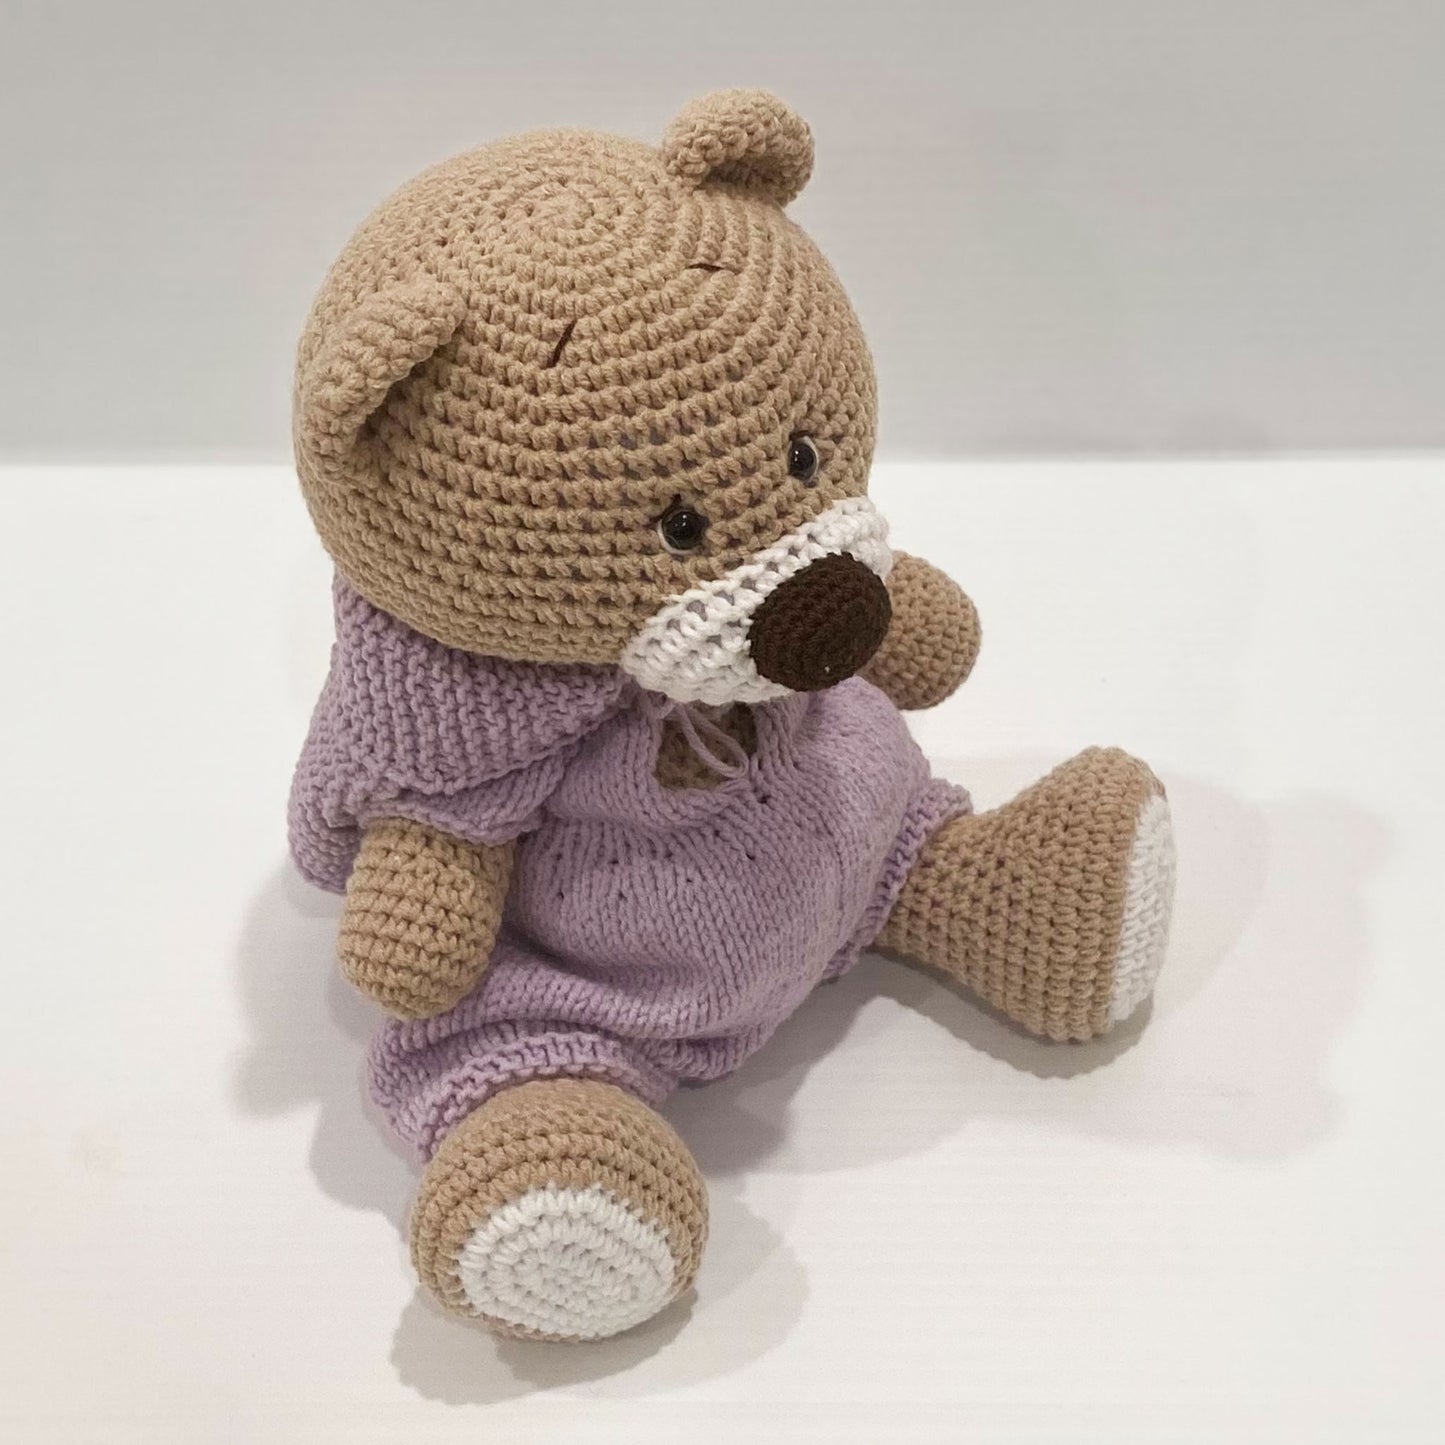 Purple Lulibears Crochet Teddy Bears. Handmade stuffed animal, puppy, knit by hand.